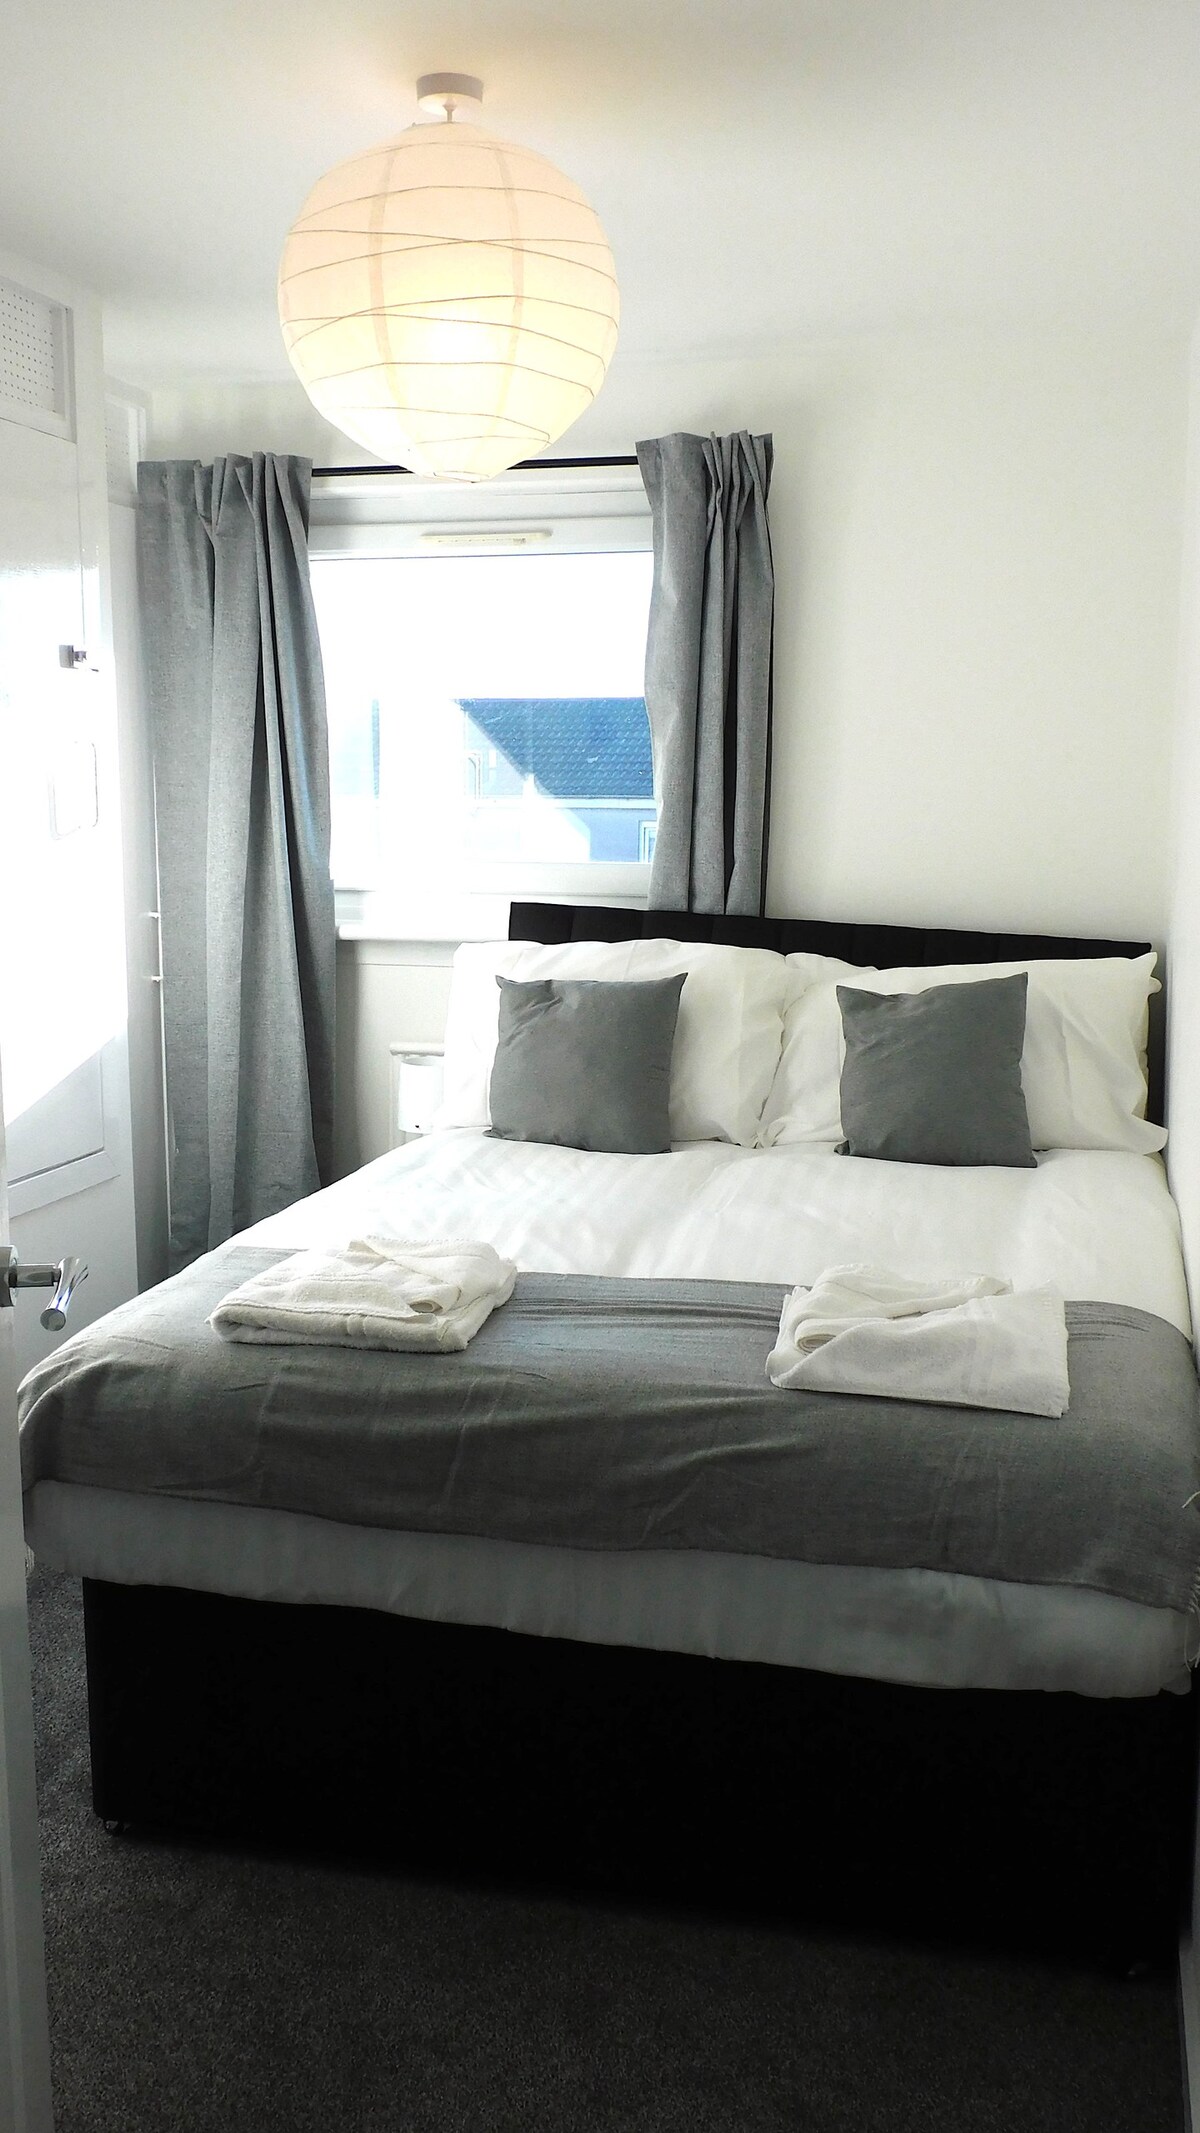 New & delightful 3 bed house in East Kilbride